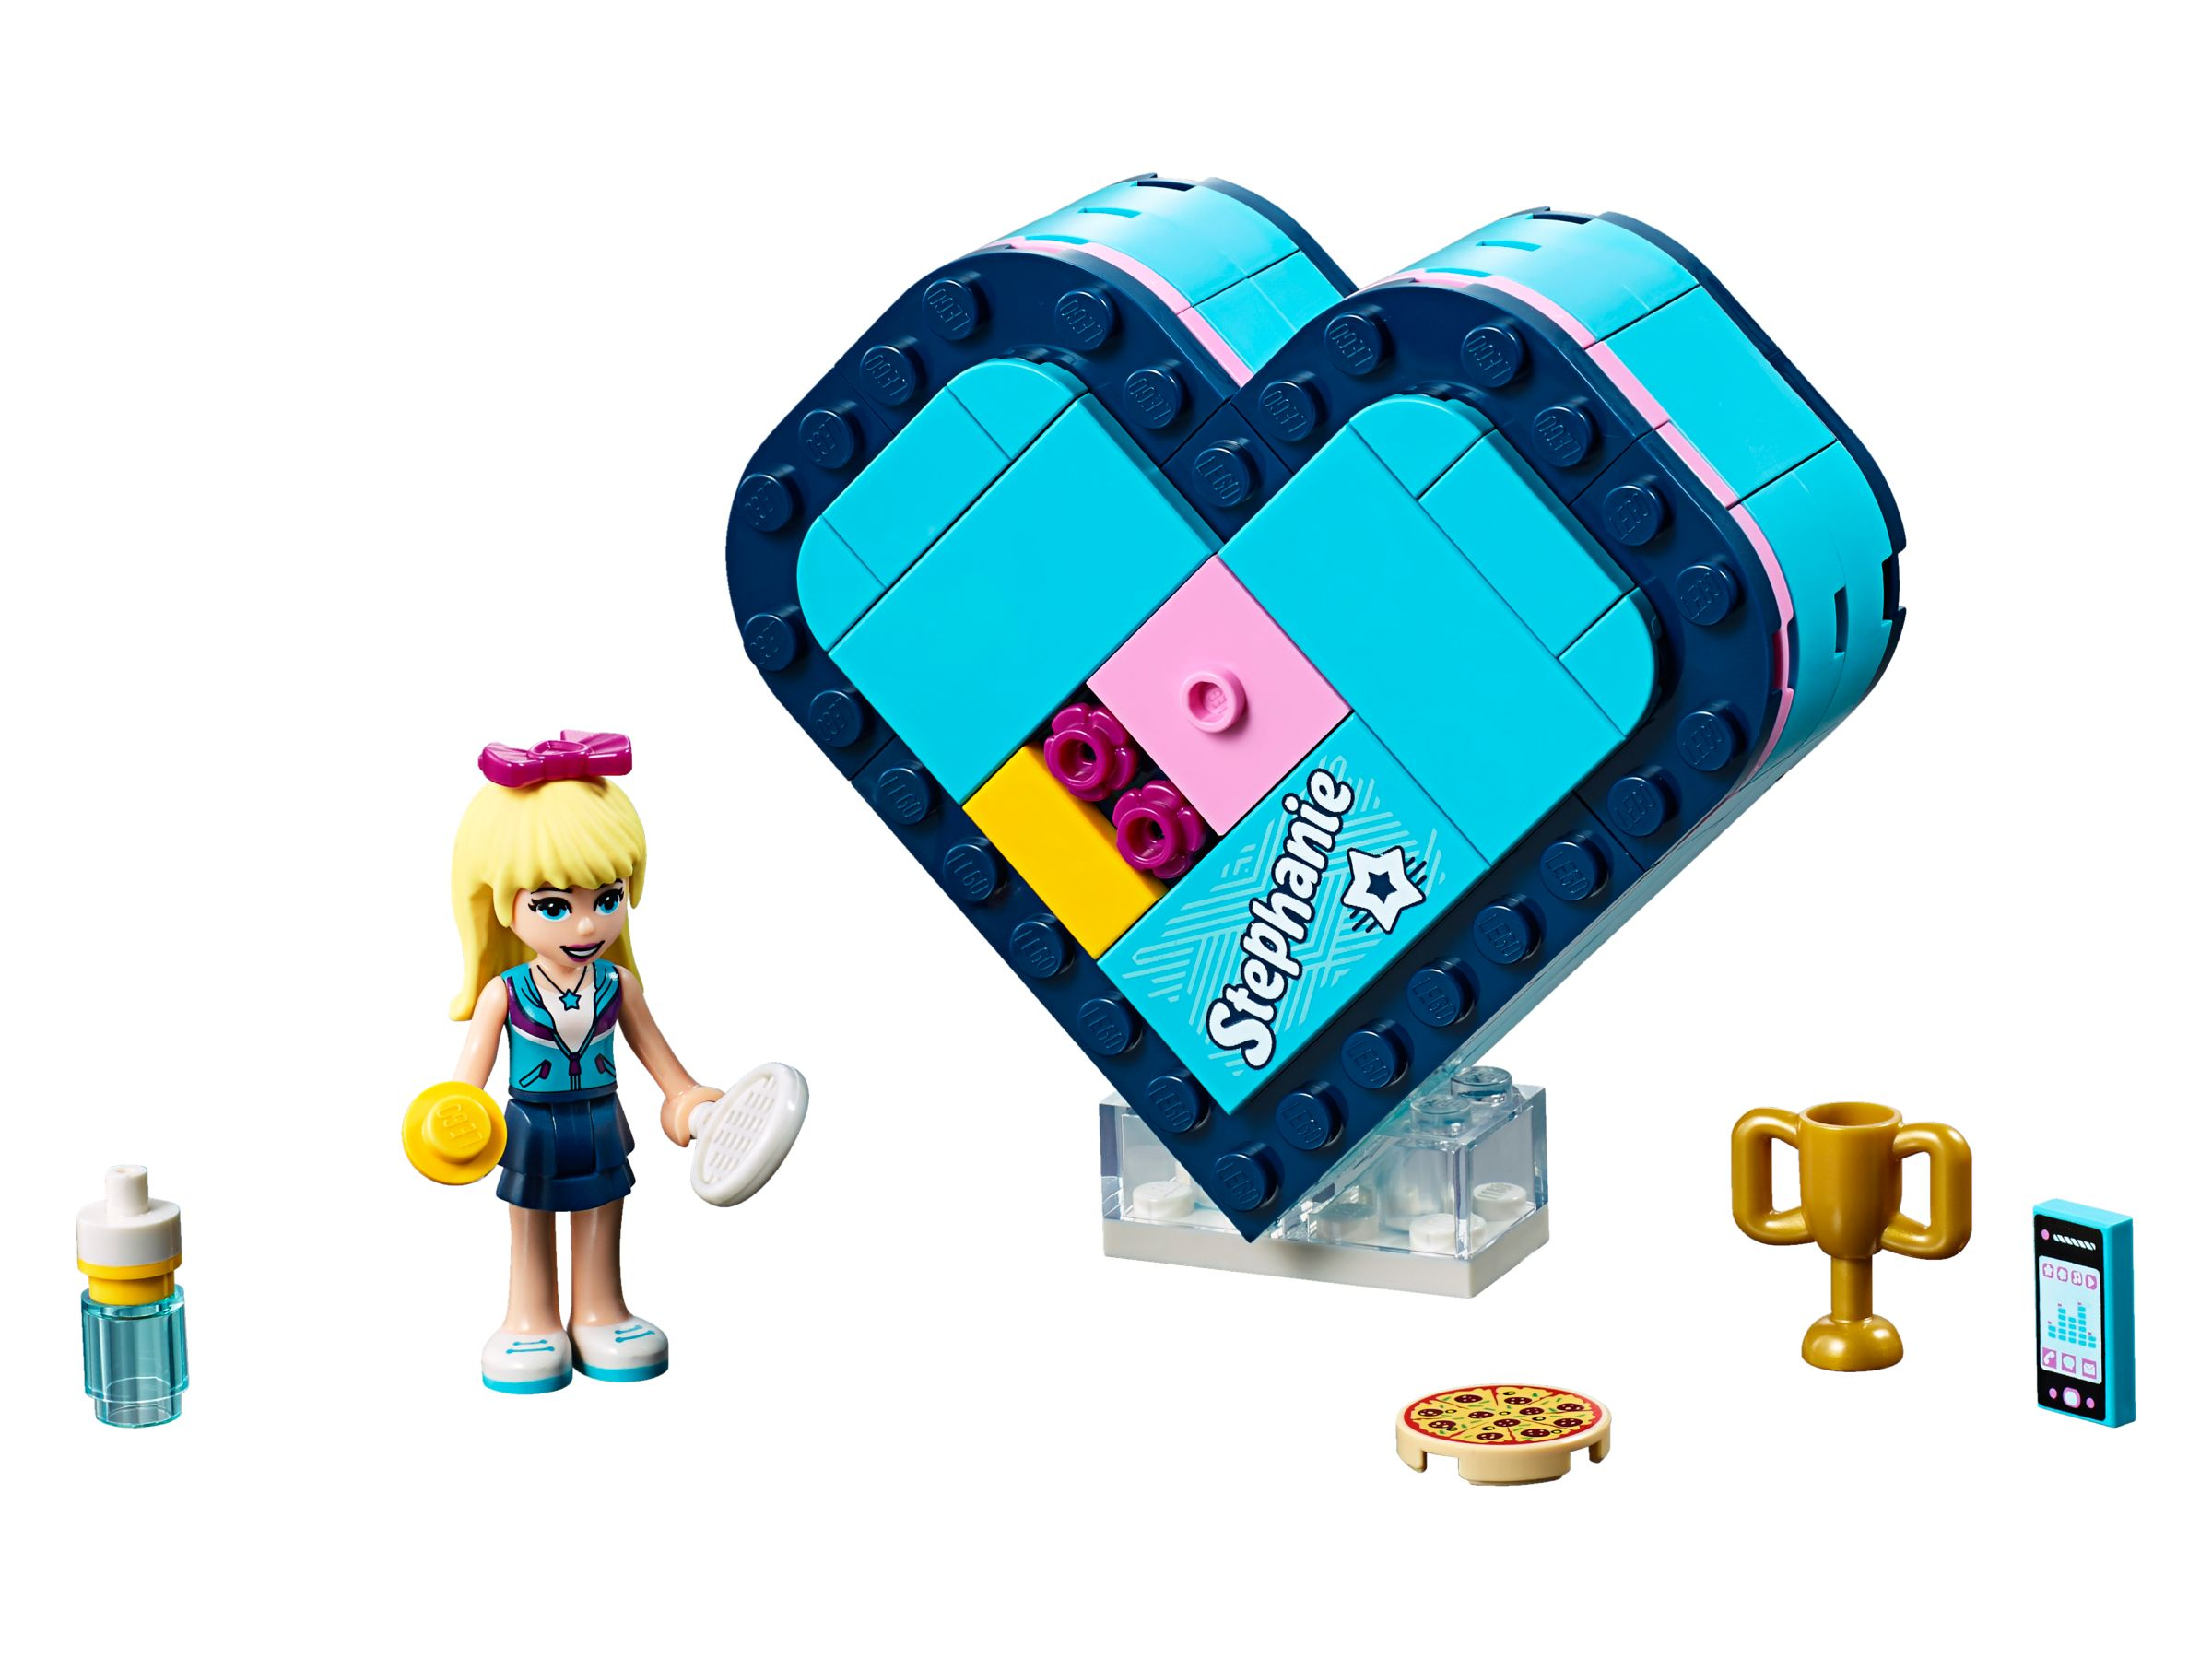 Stephanies 41356 LEGO Herzbox Bausatz